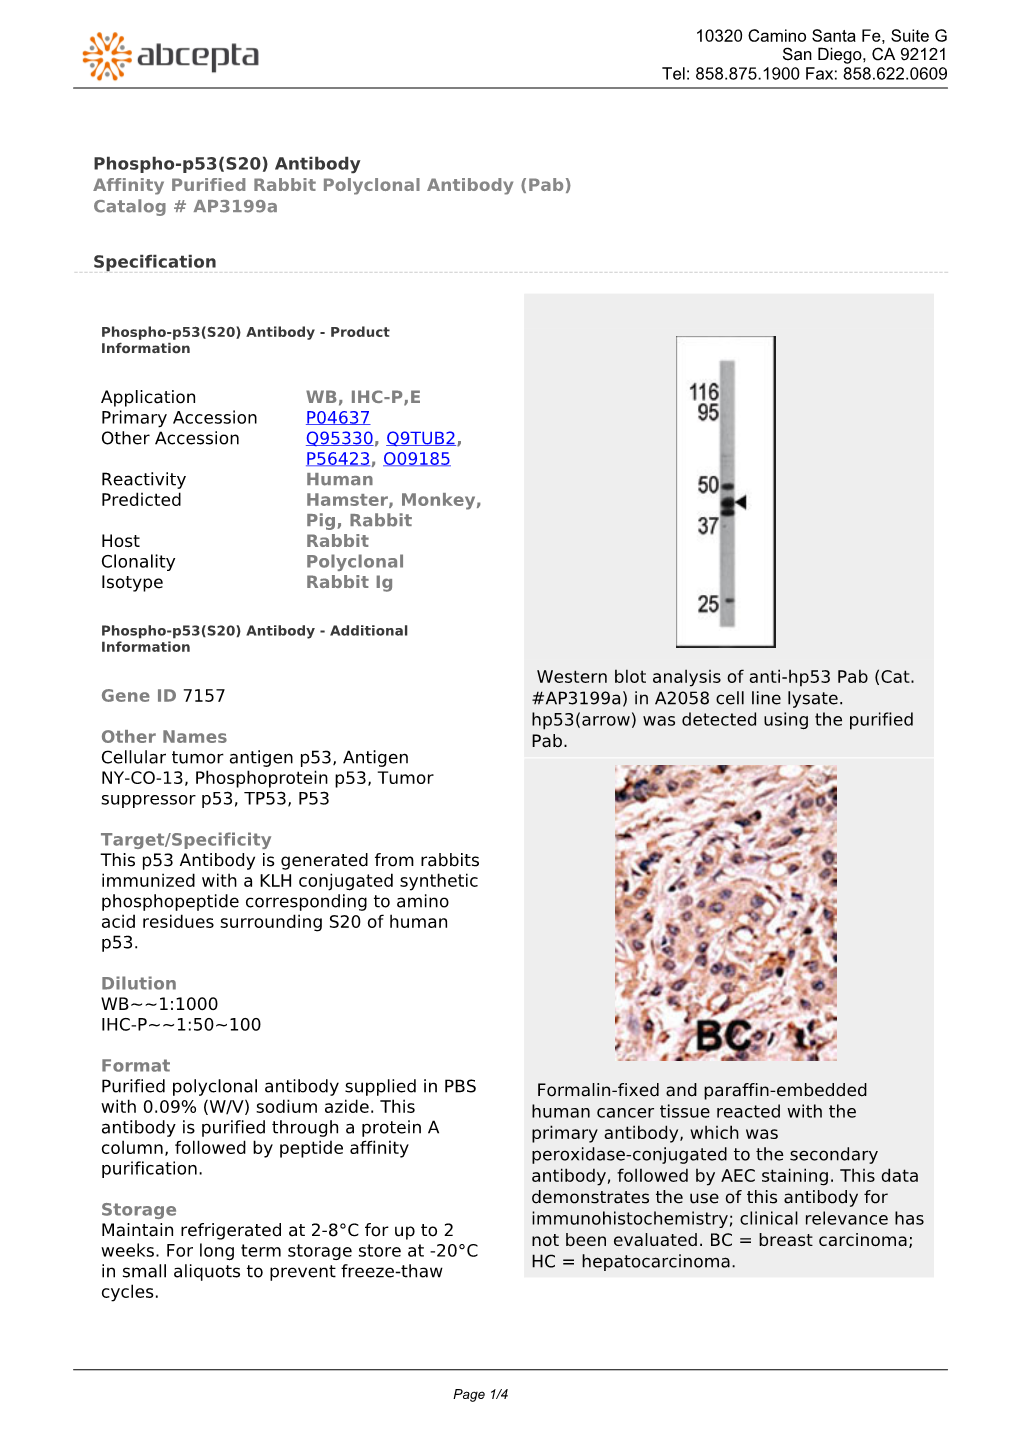 Phospho-P53(S20) Antibody Affinity Purified Rabbit Polyclonal Antibody (Pab) Catalog # Ap3199a